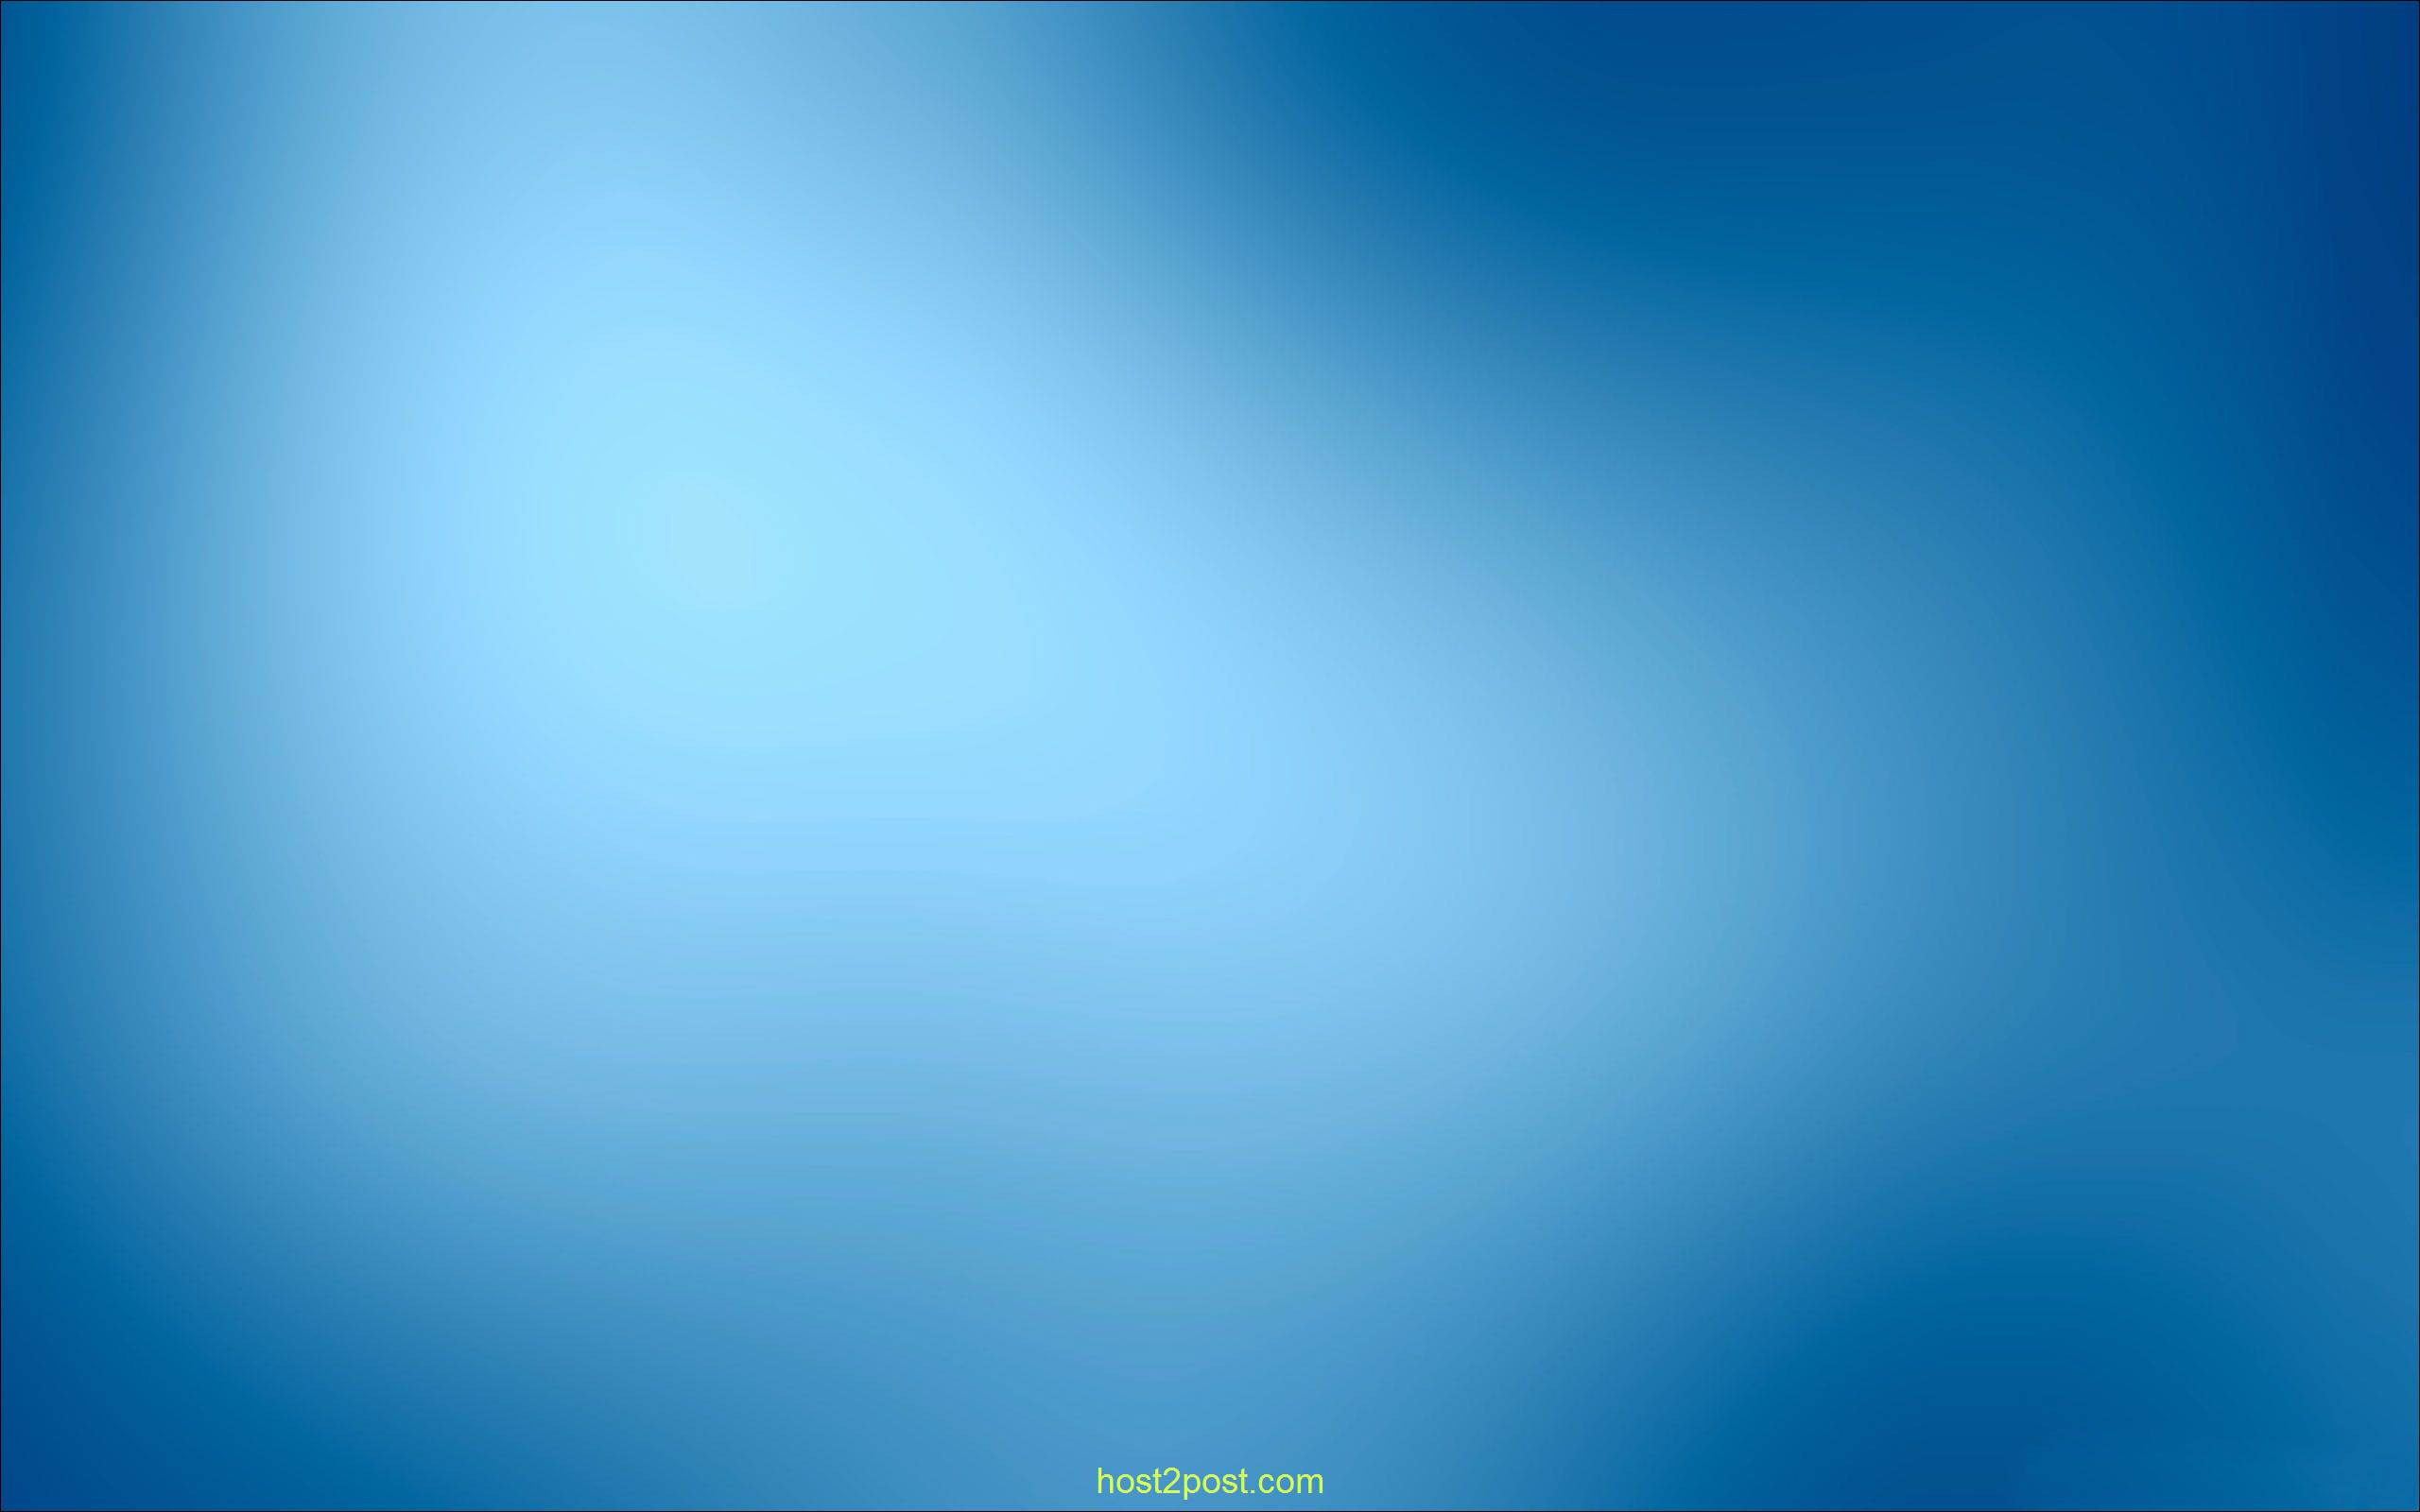 Best Blue Background Image